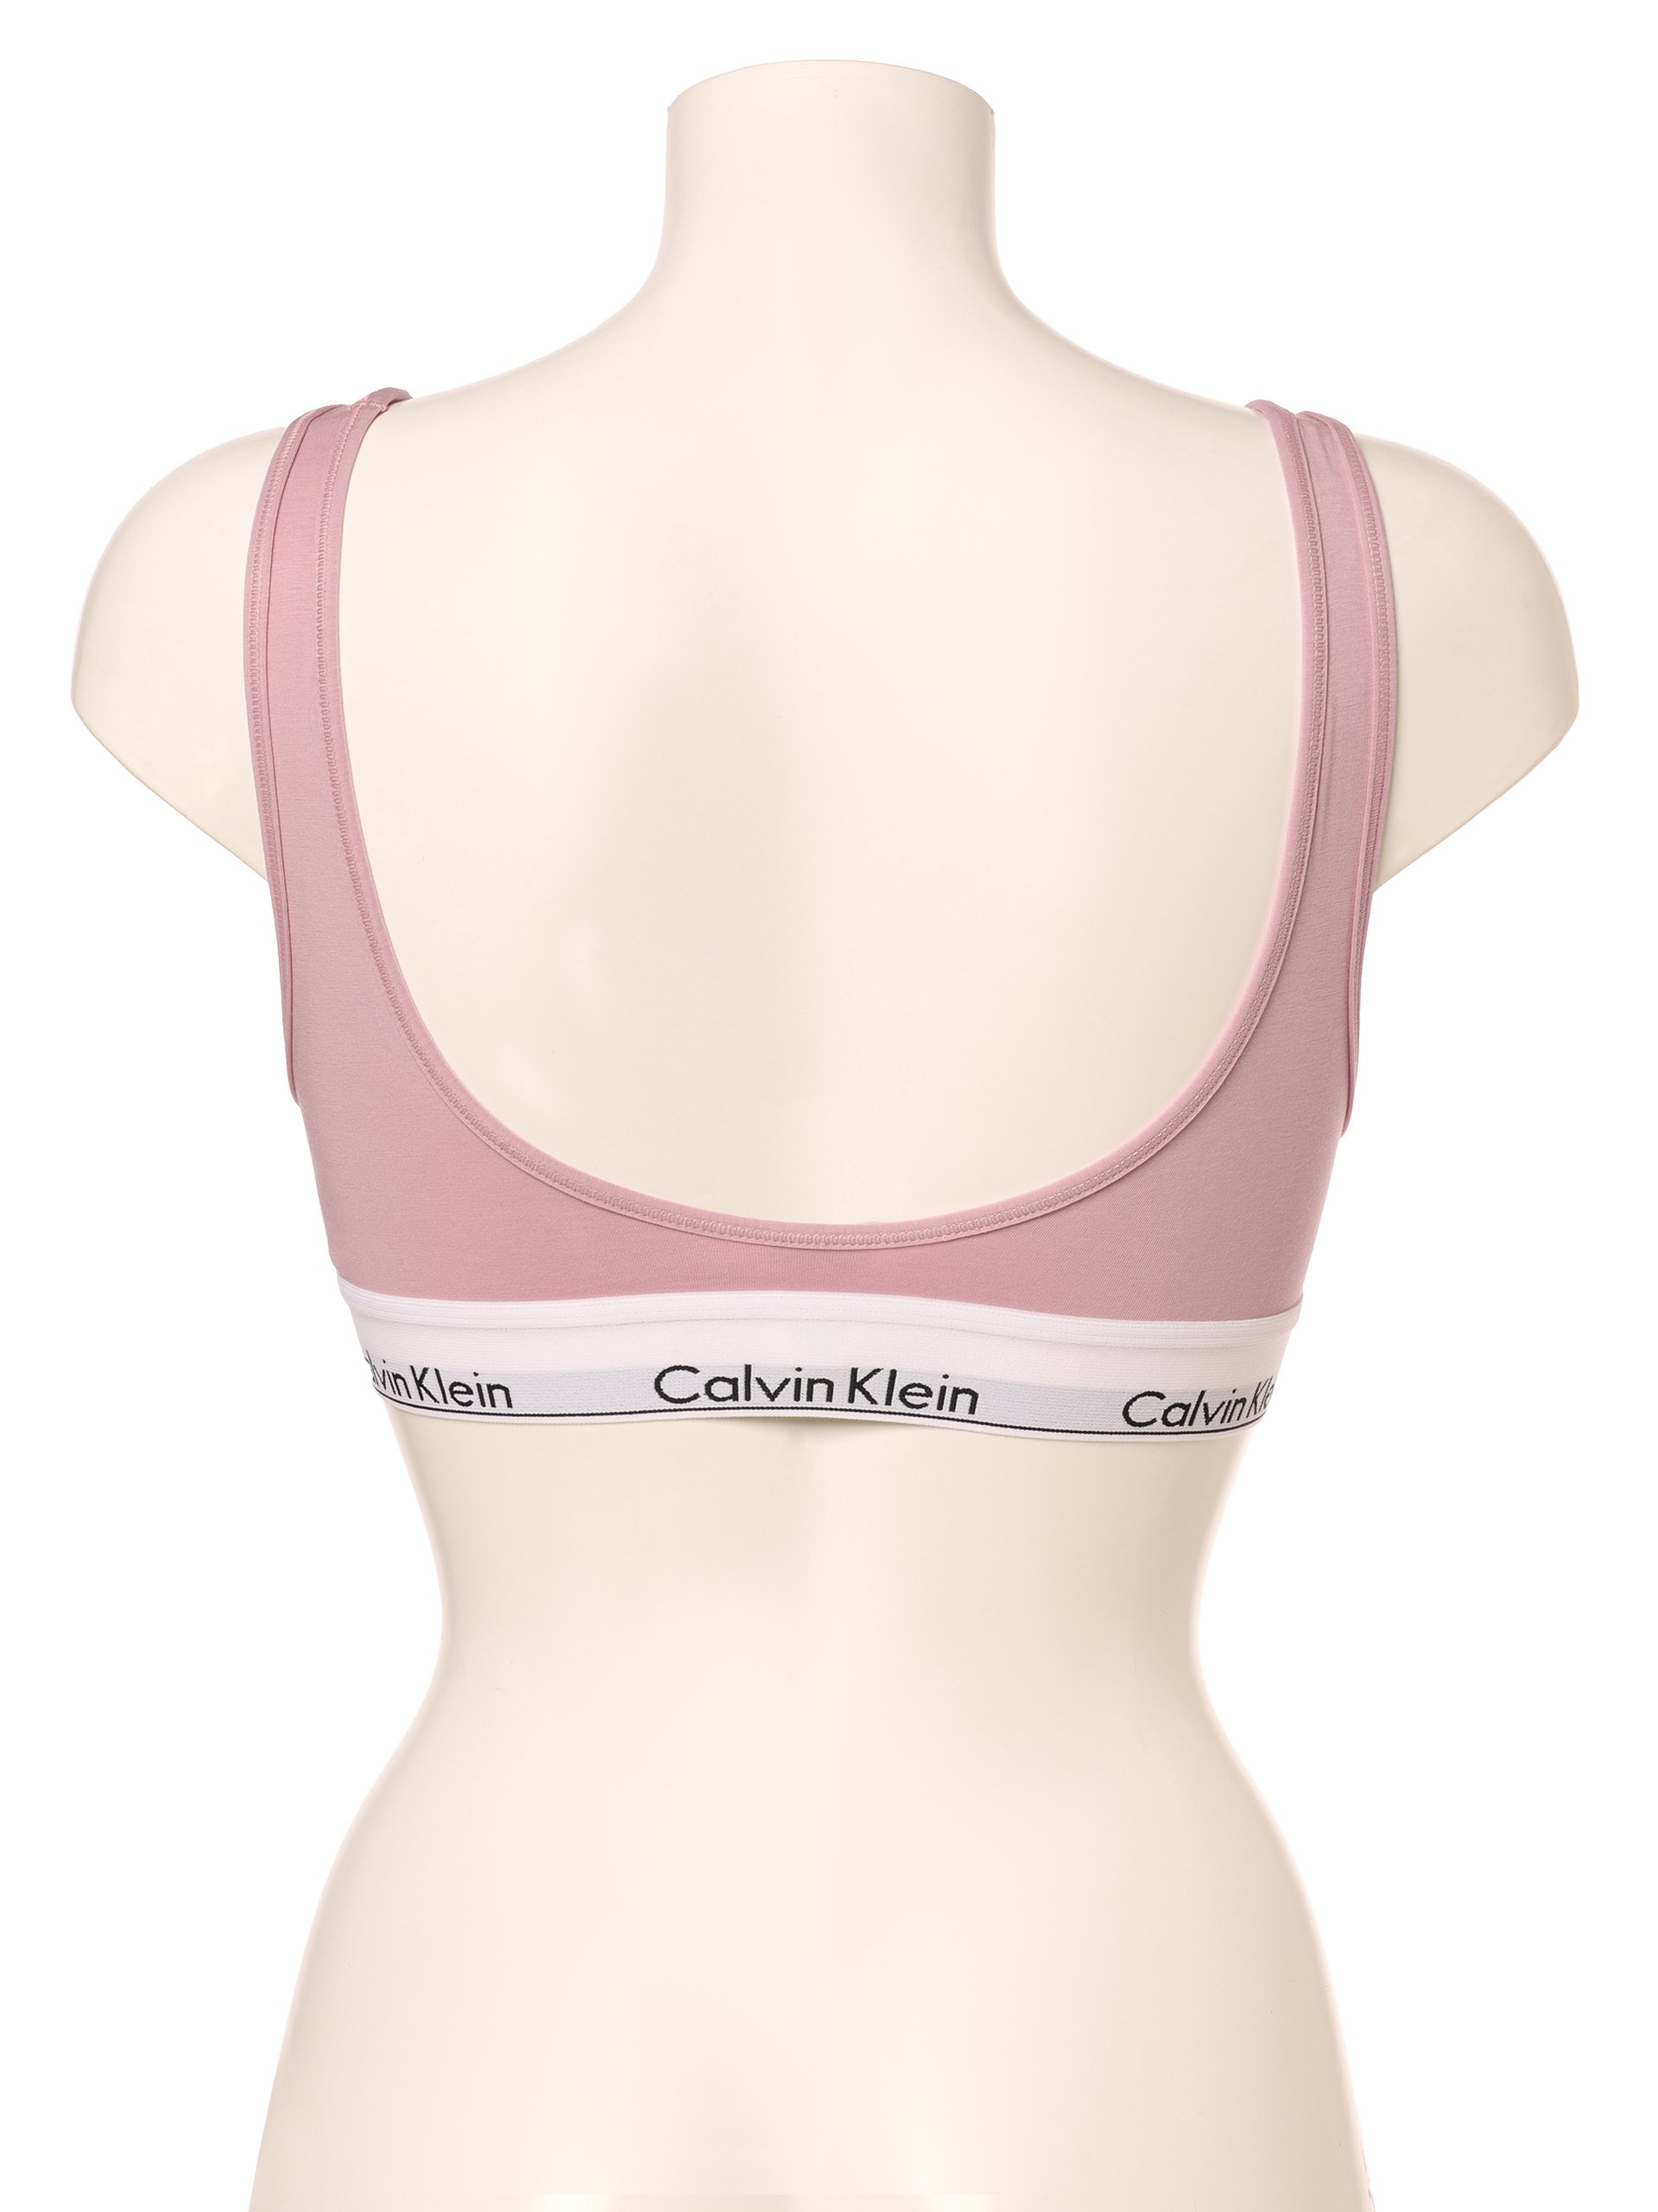 Biustonosz usztywniany Calvin Klein Modern Cotton Bralette